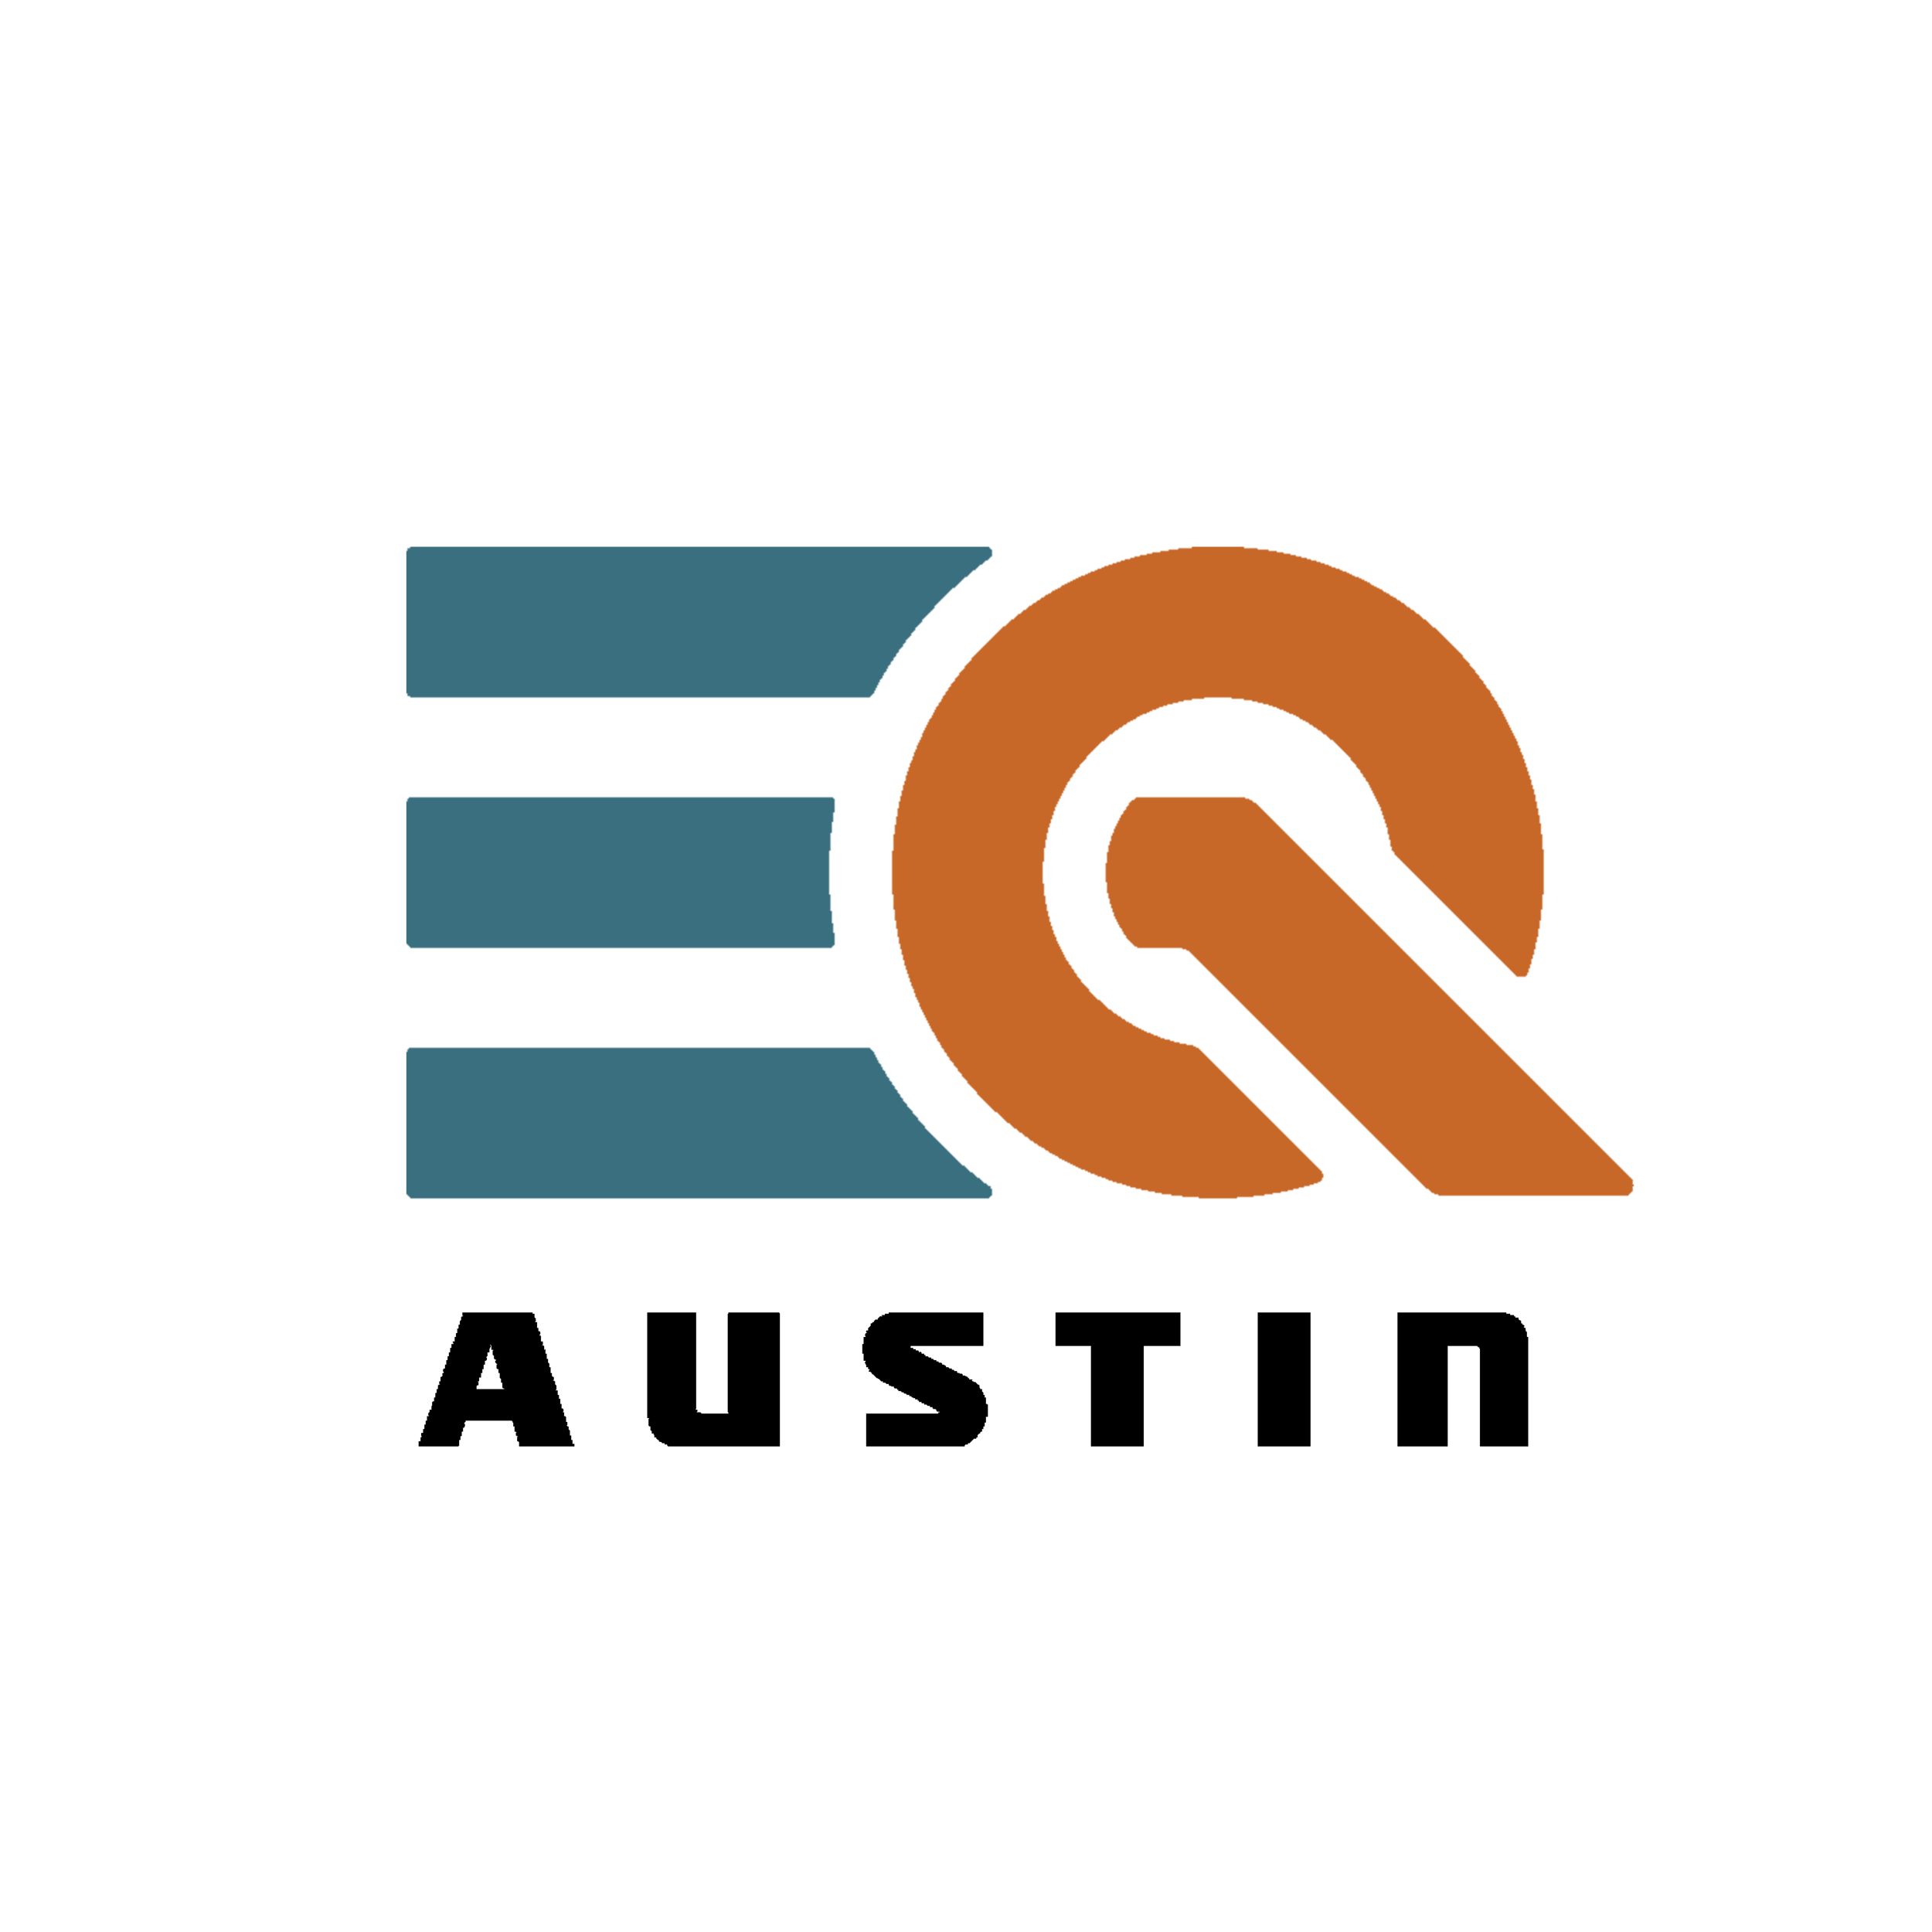 EQ black logo.png